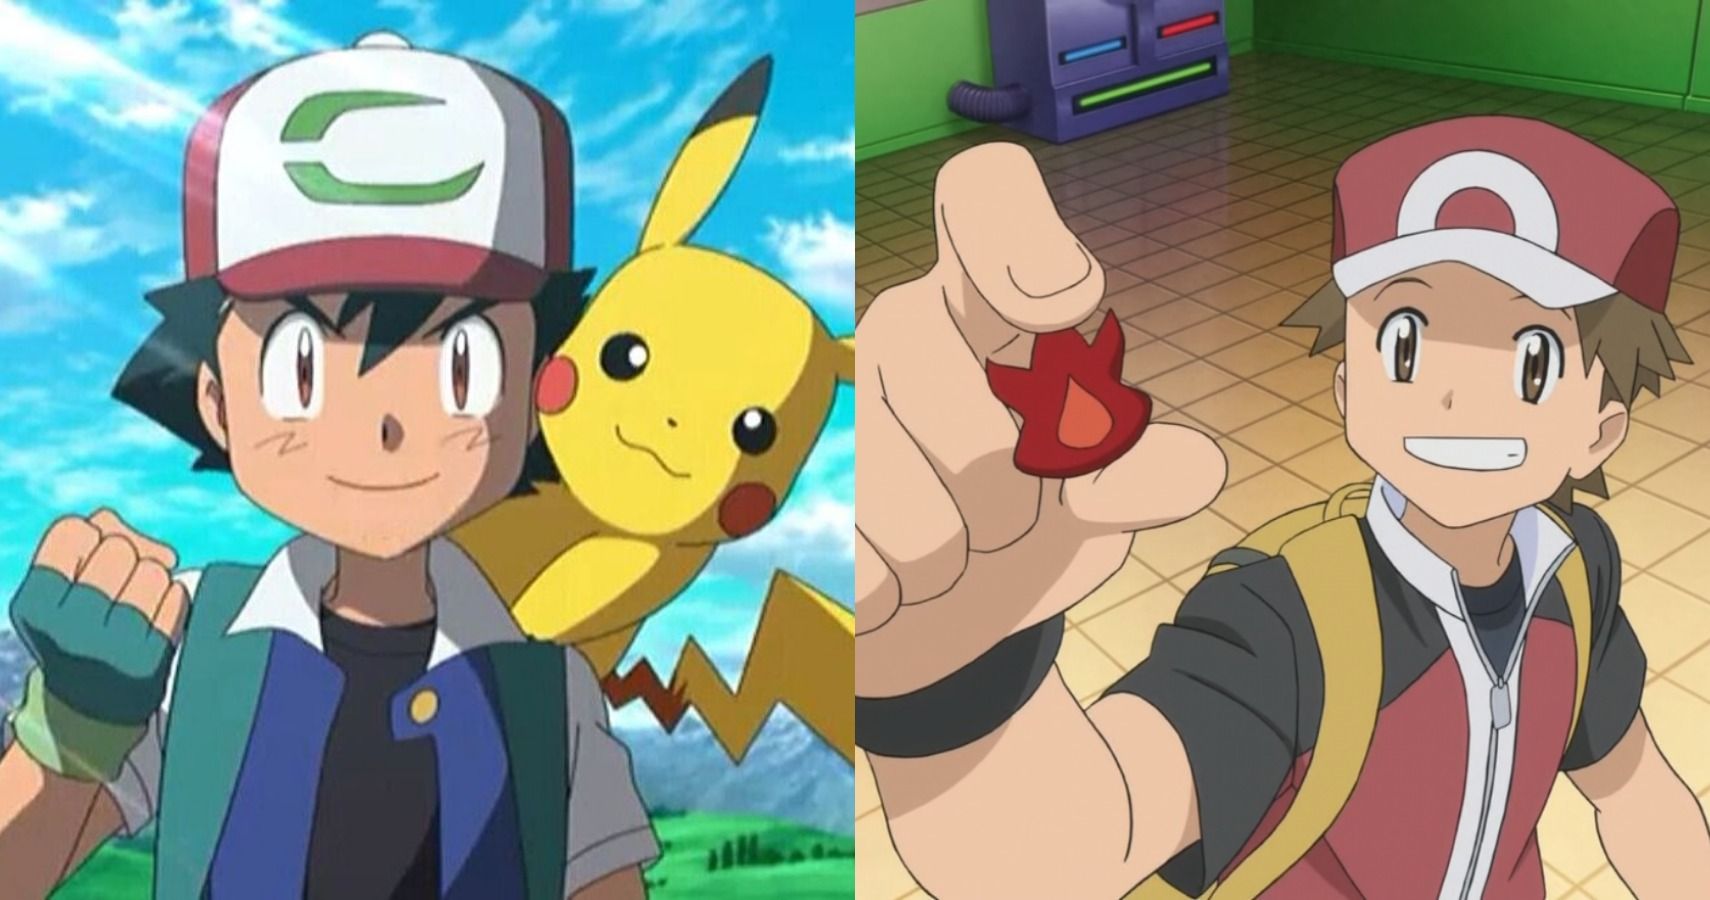 Pokémon The Origin - Final Review - Chikorita157's Anime Blog